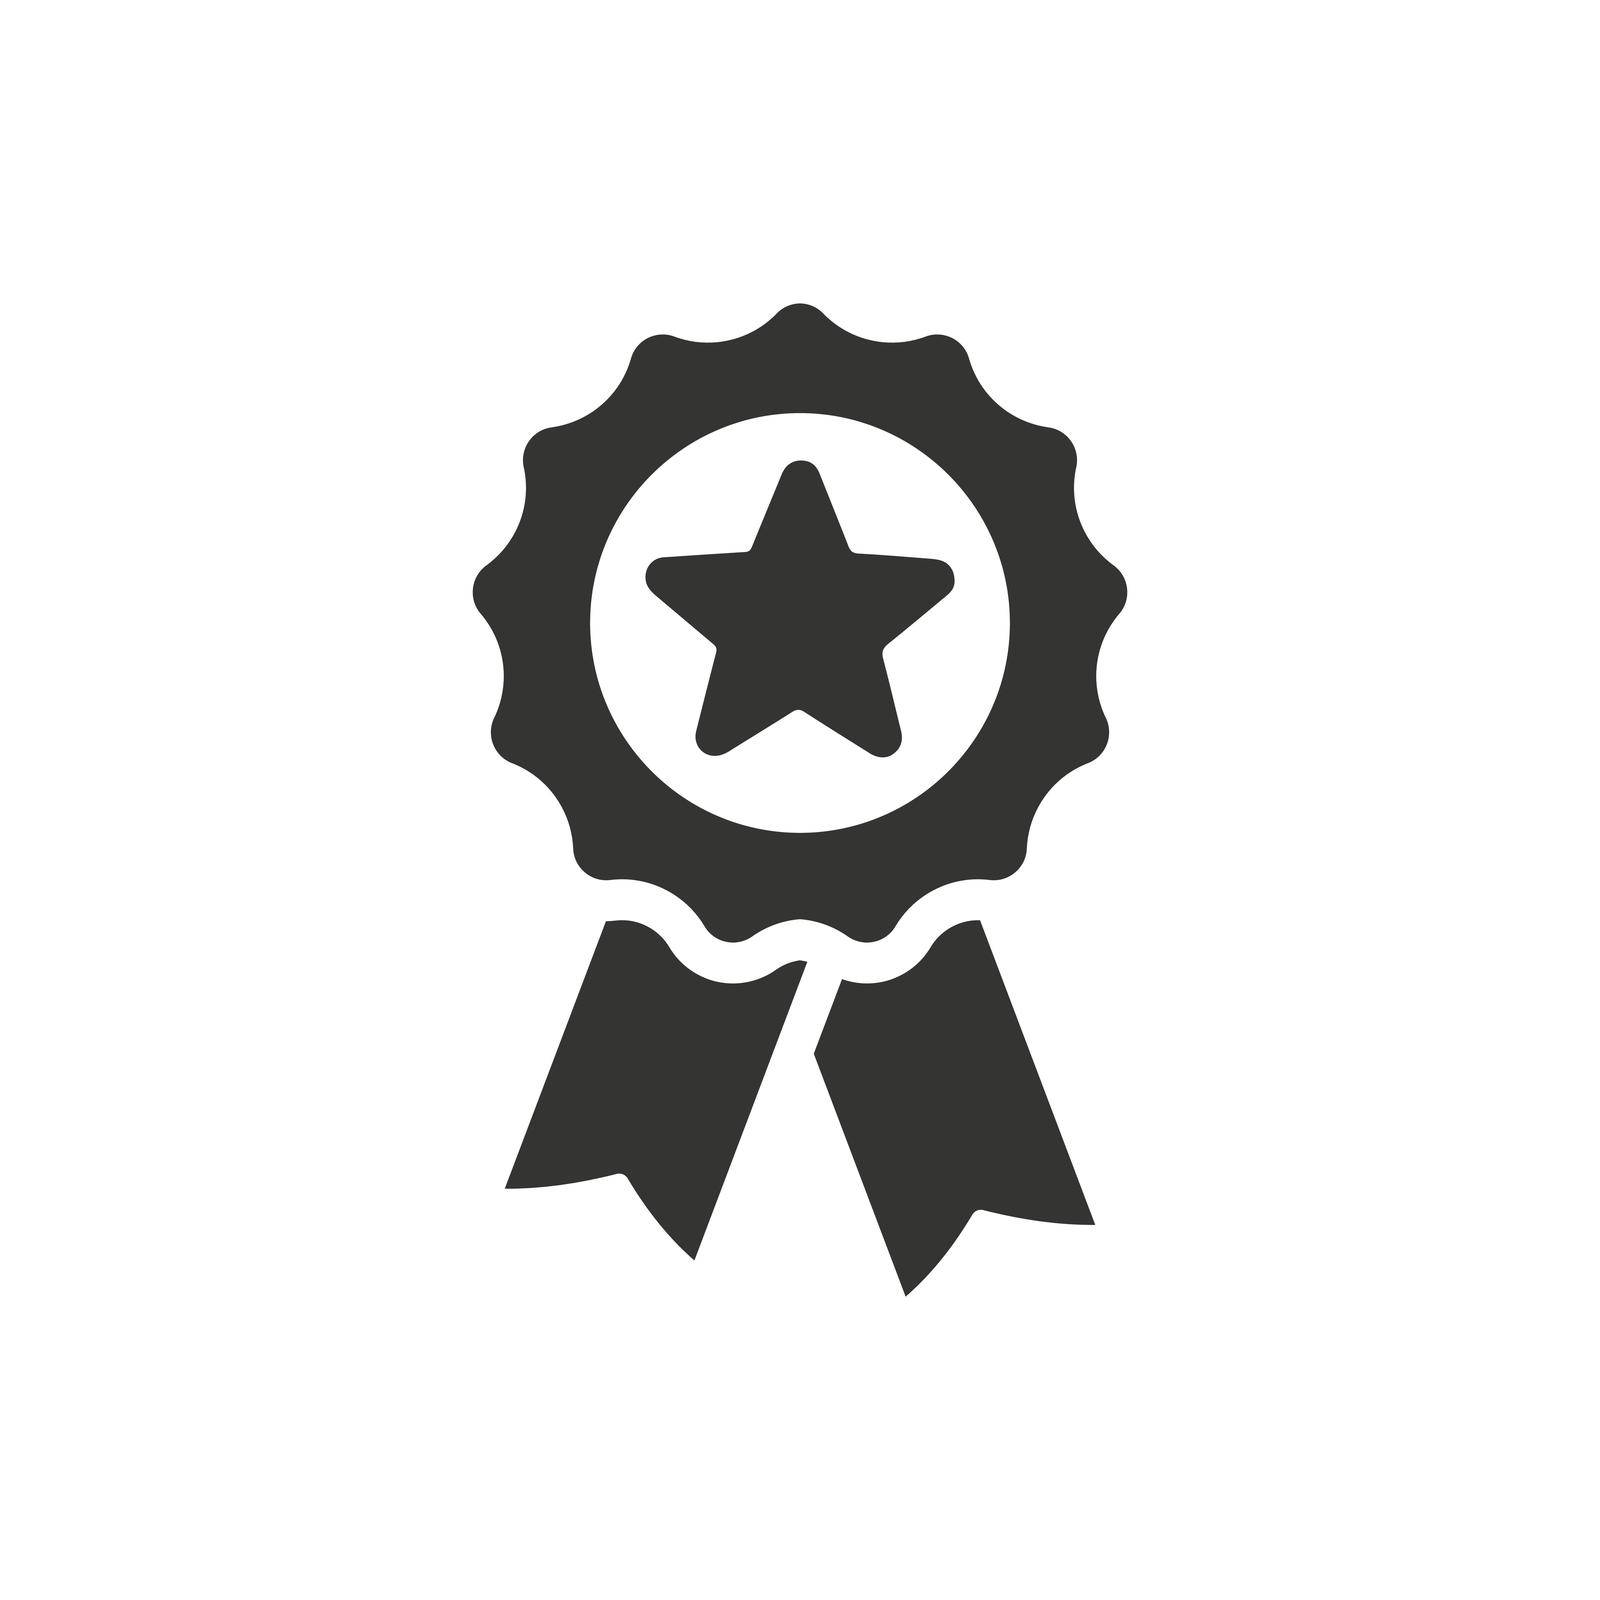 Award Badge icon. Vector EPS file.